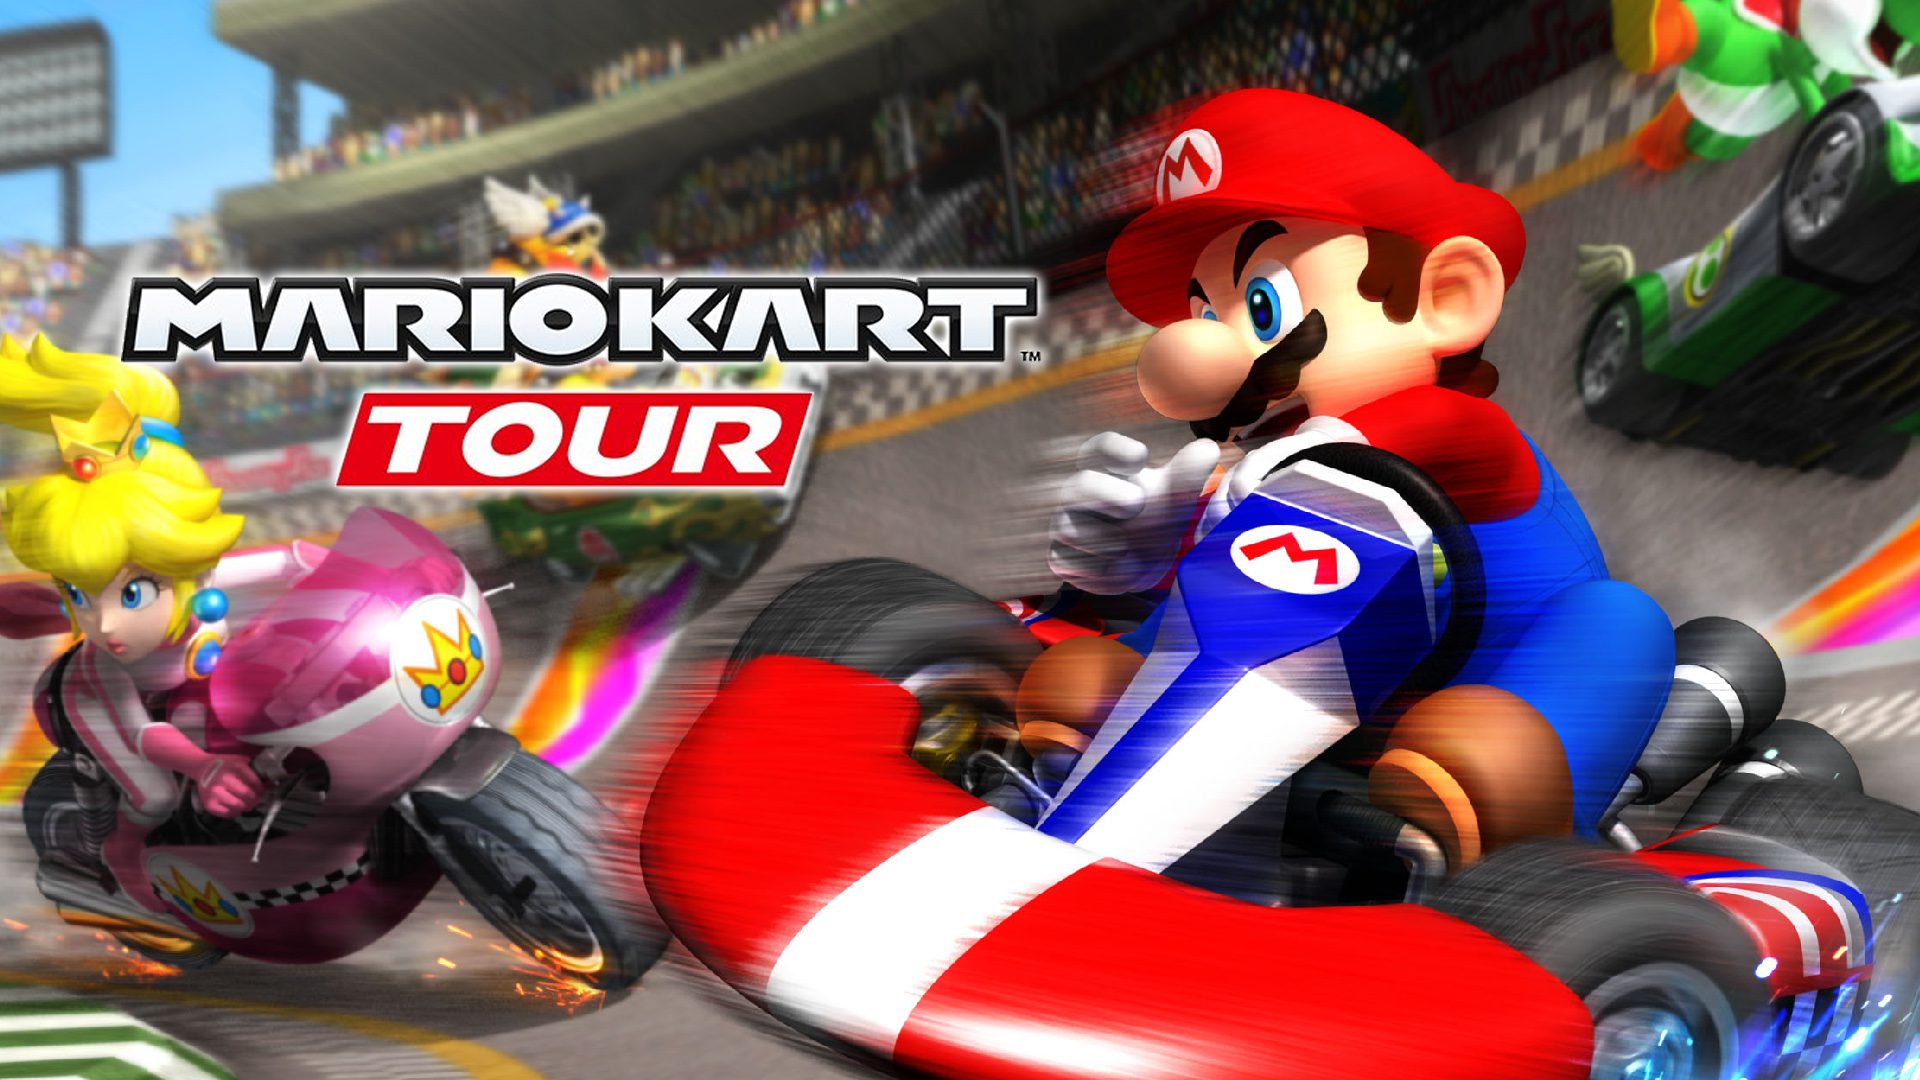 Mario Kart Tour will be “Free to Start”